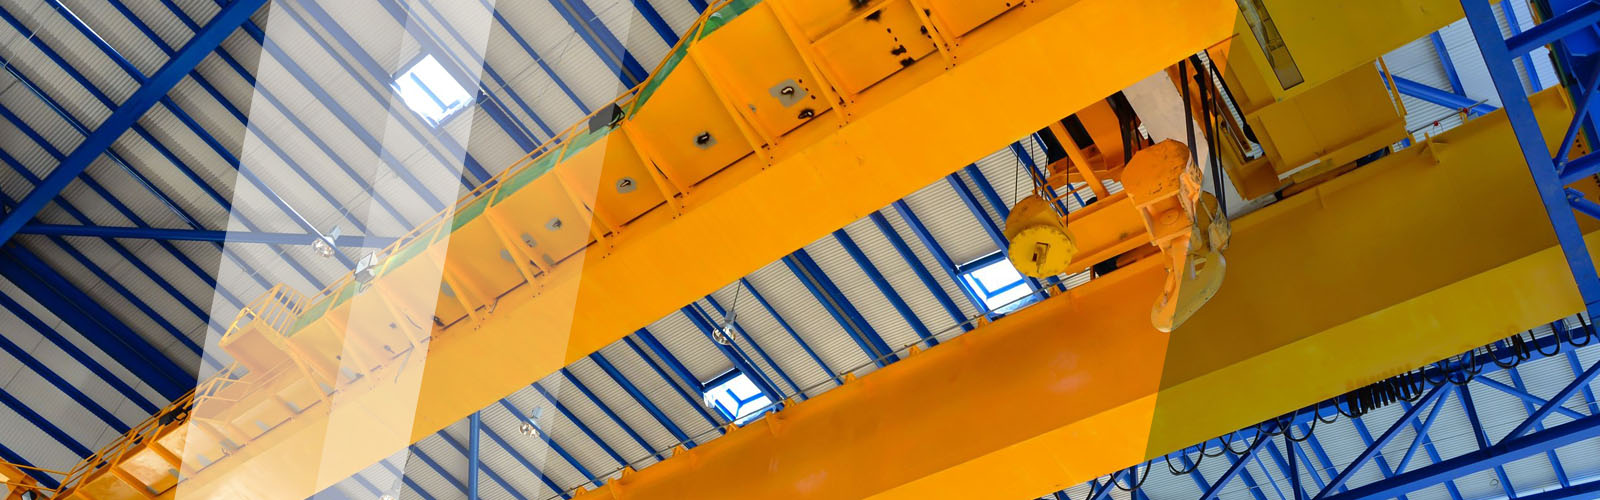 crane in warehouse